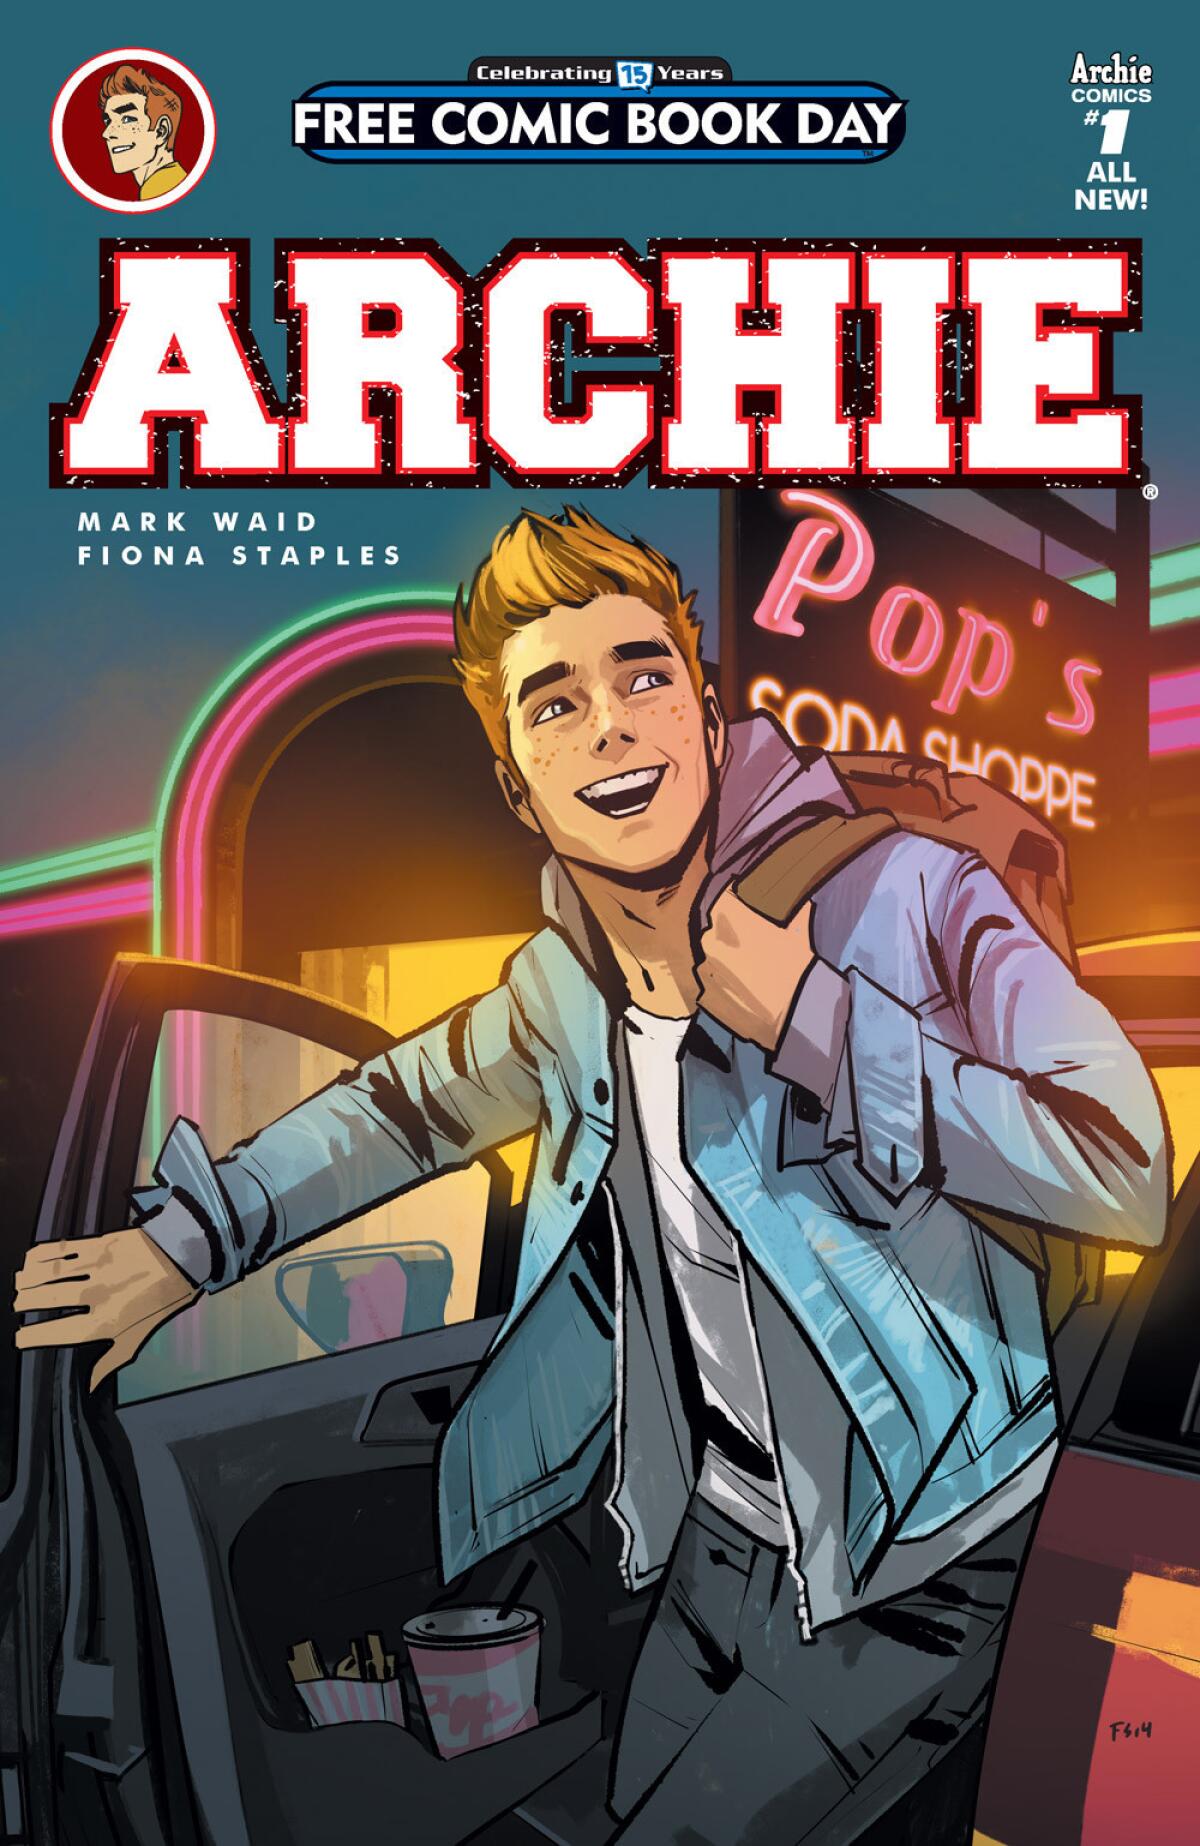 "Archie" No. 1 FCBD edition by Mark Waid and Fiona Staples. (Archie Comics)